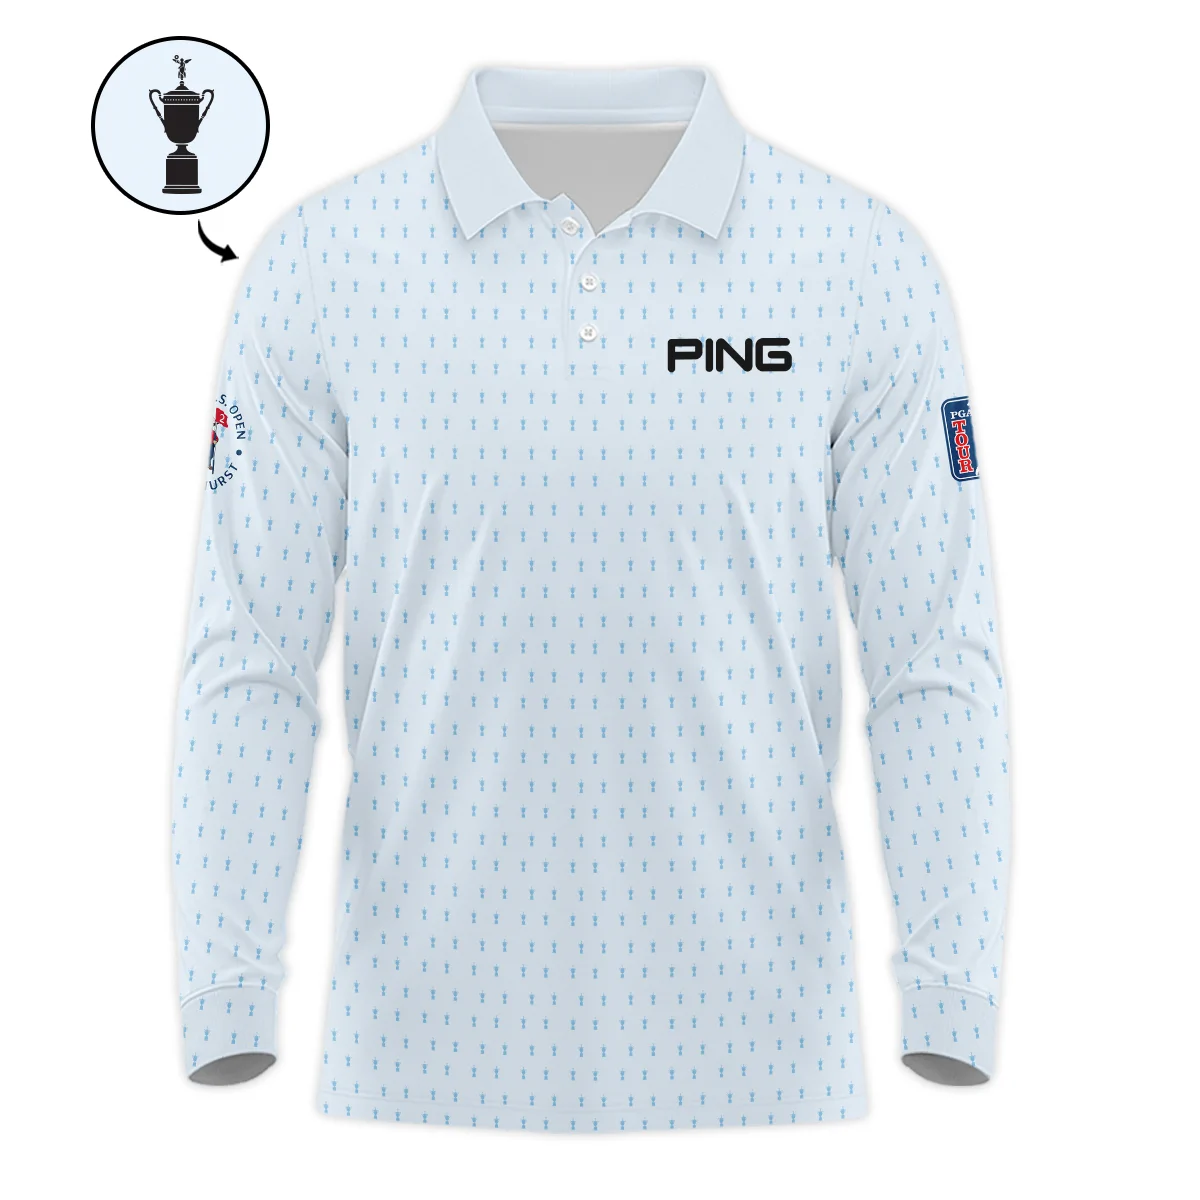 124th U.S. Open Pinehurst Ping Hoodie Shirt Sports Pattern Cup Color Light Blue All Over Print Hoodie Shirt